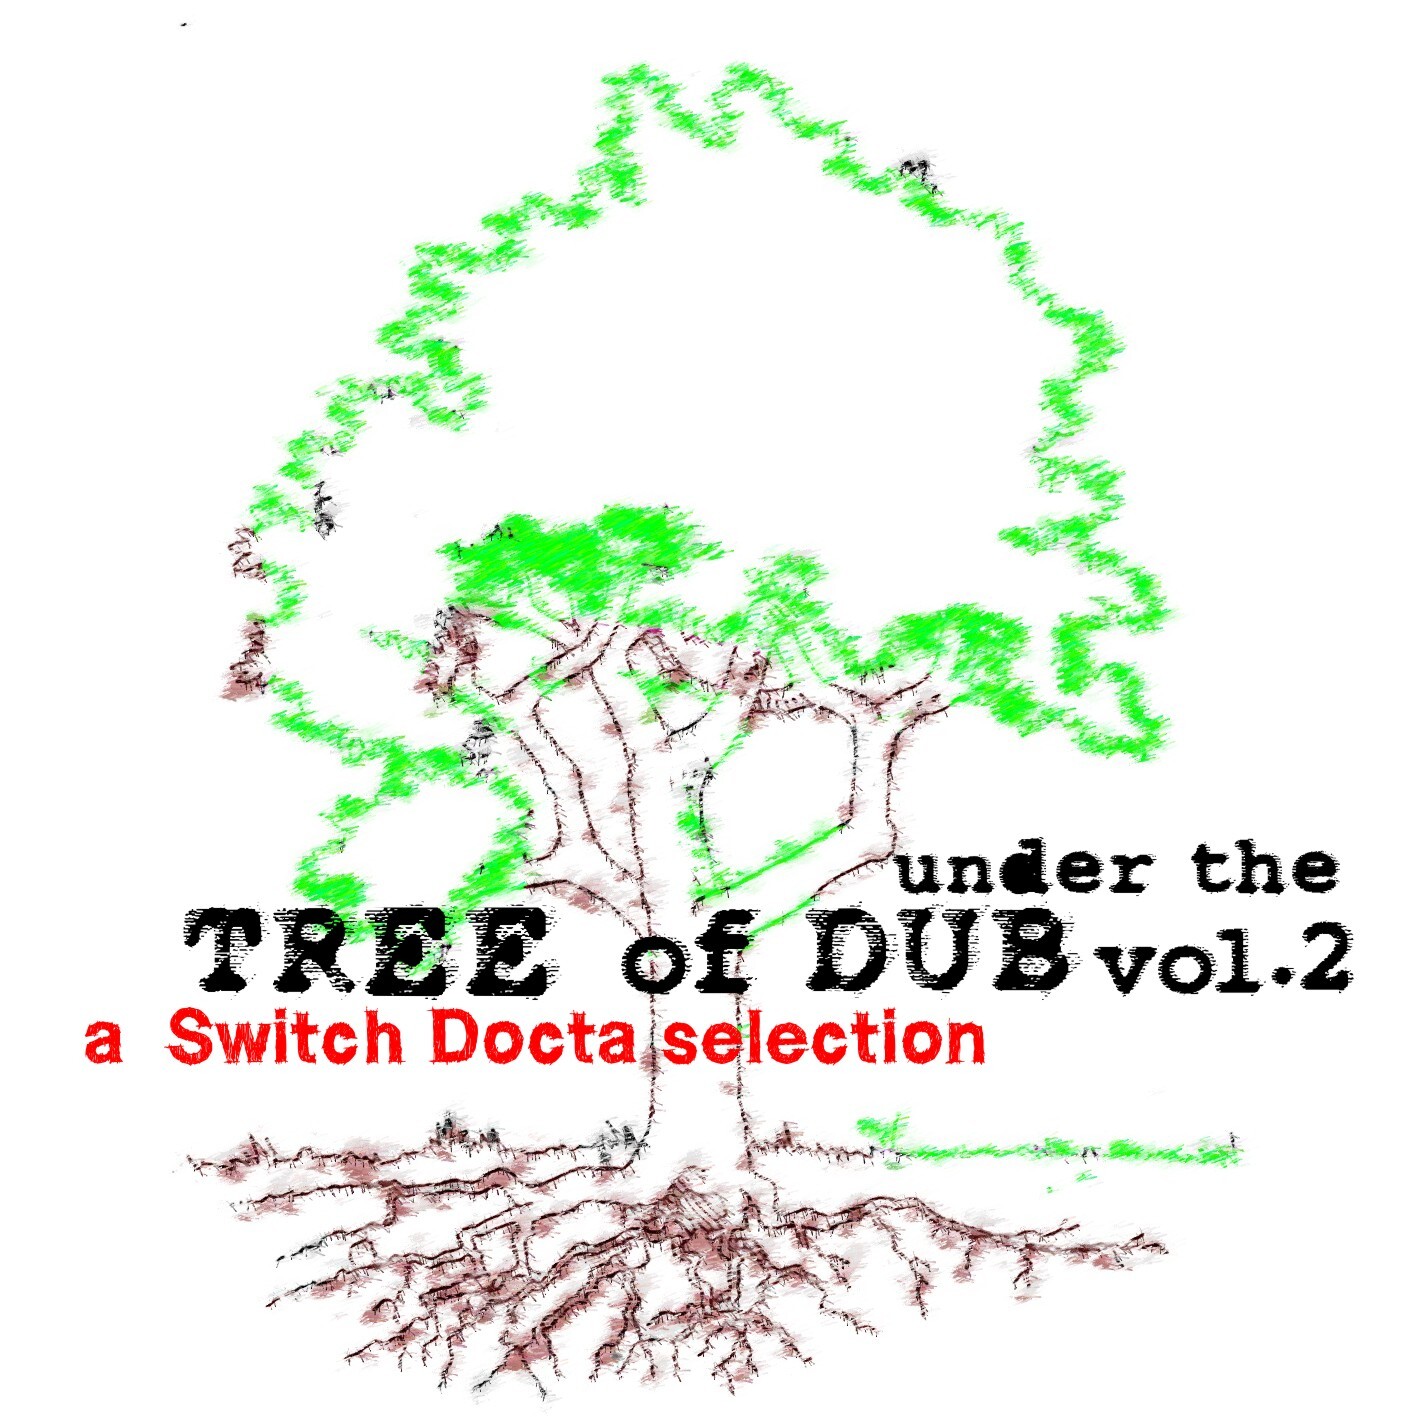 36_Under_the_tree_of_dub_vol2_front_gro.jpg